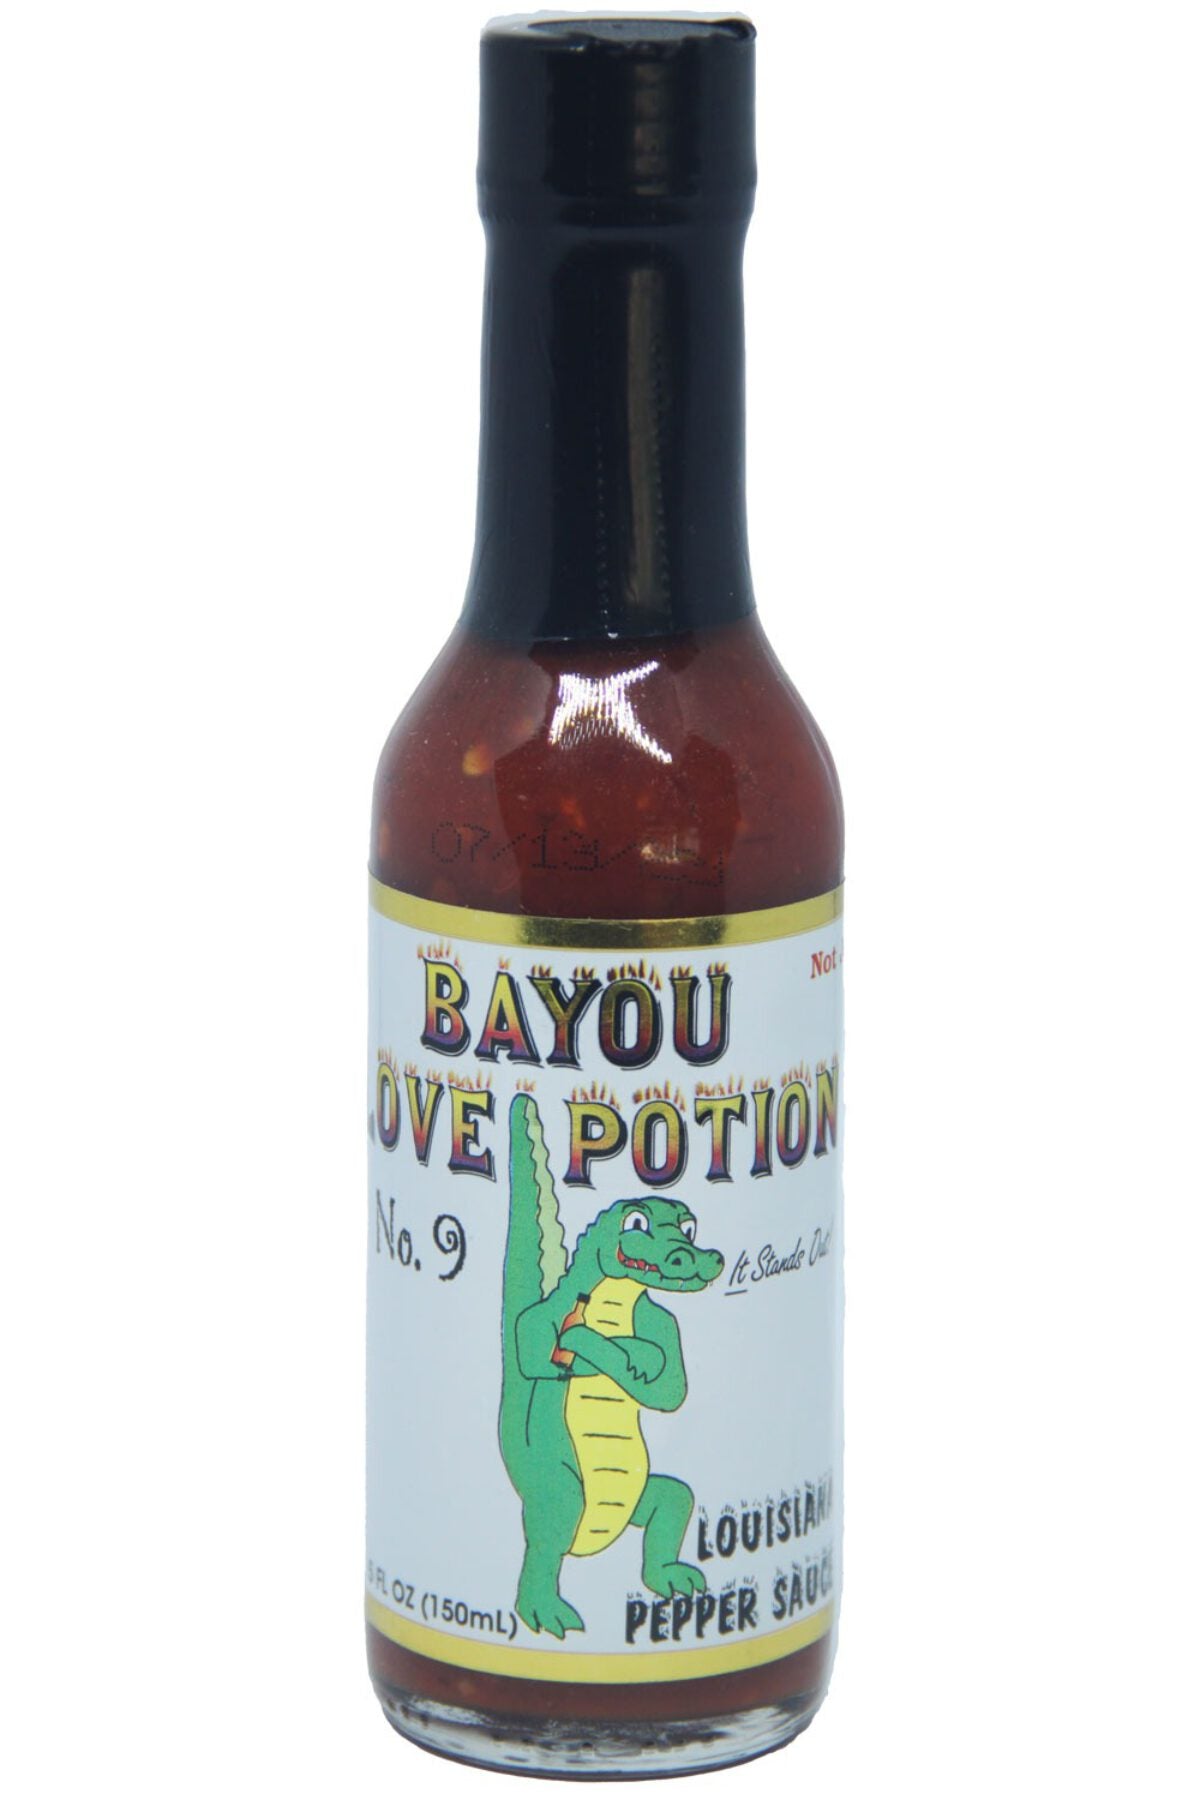 Bayou love potion